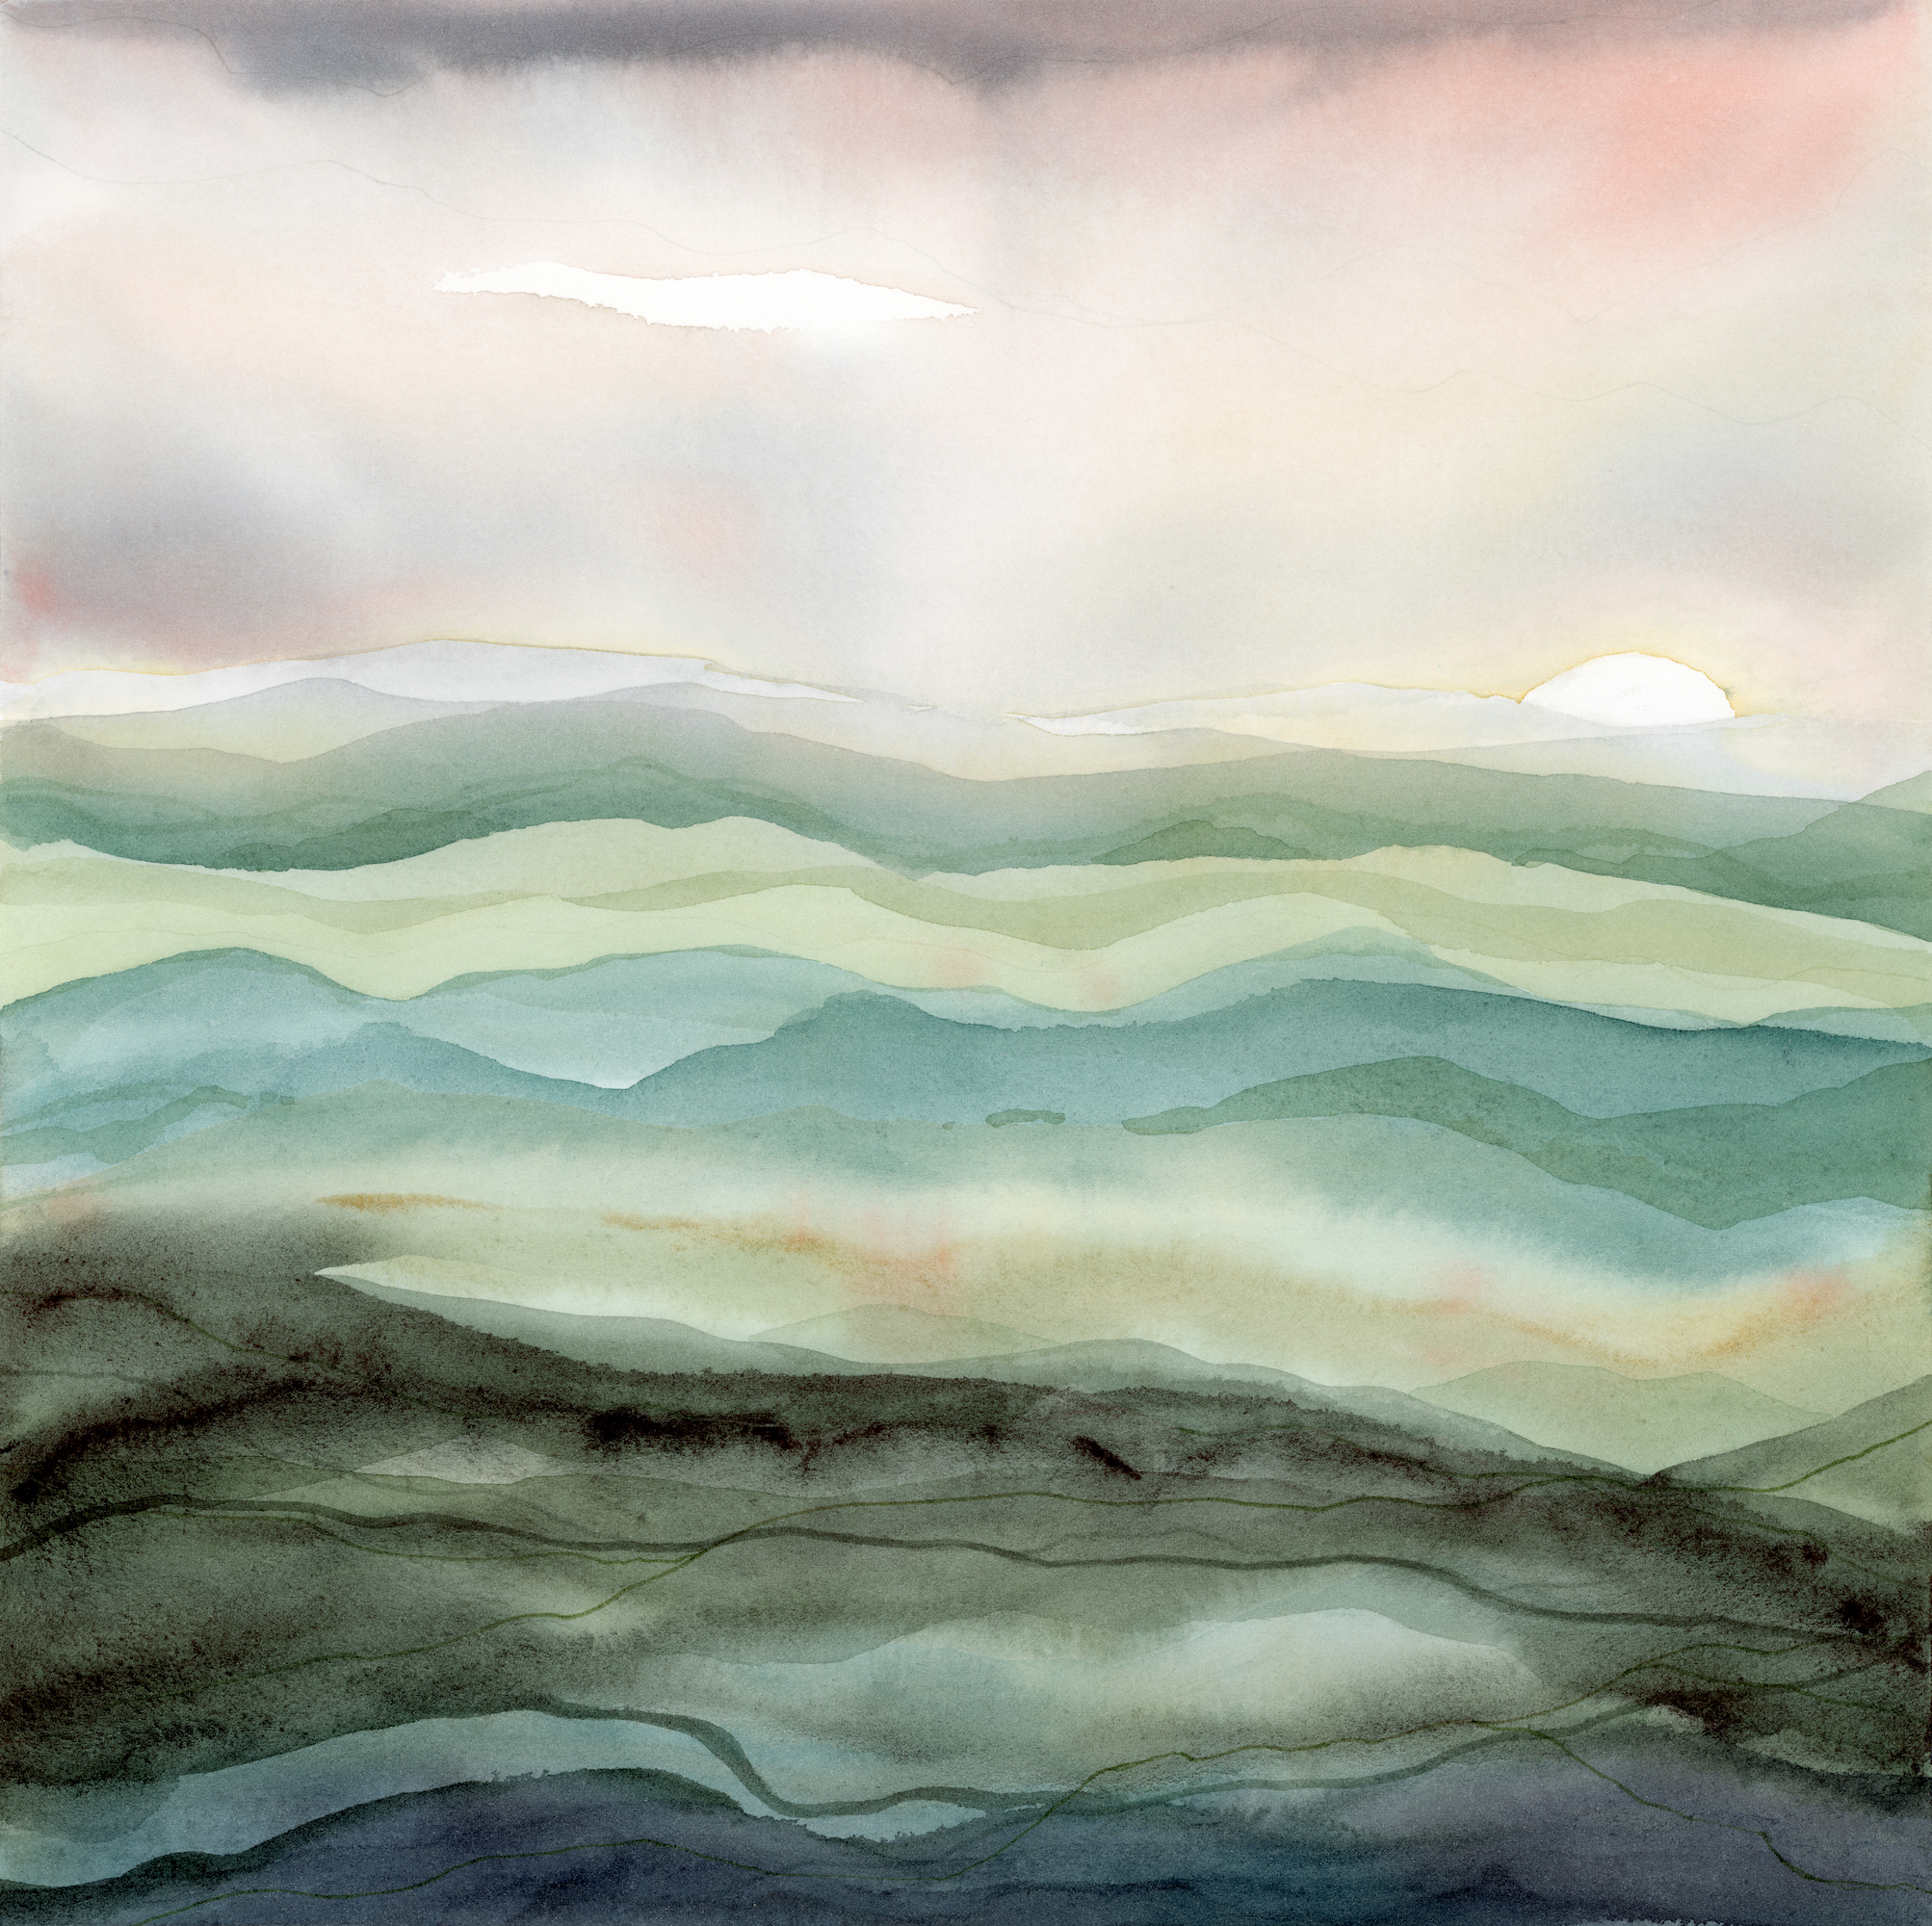 Vista--abstract landscape watercolor